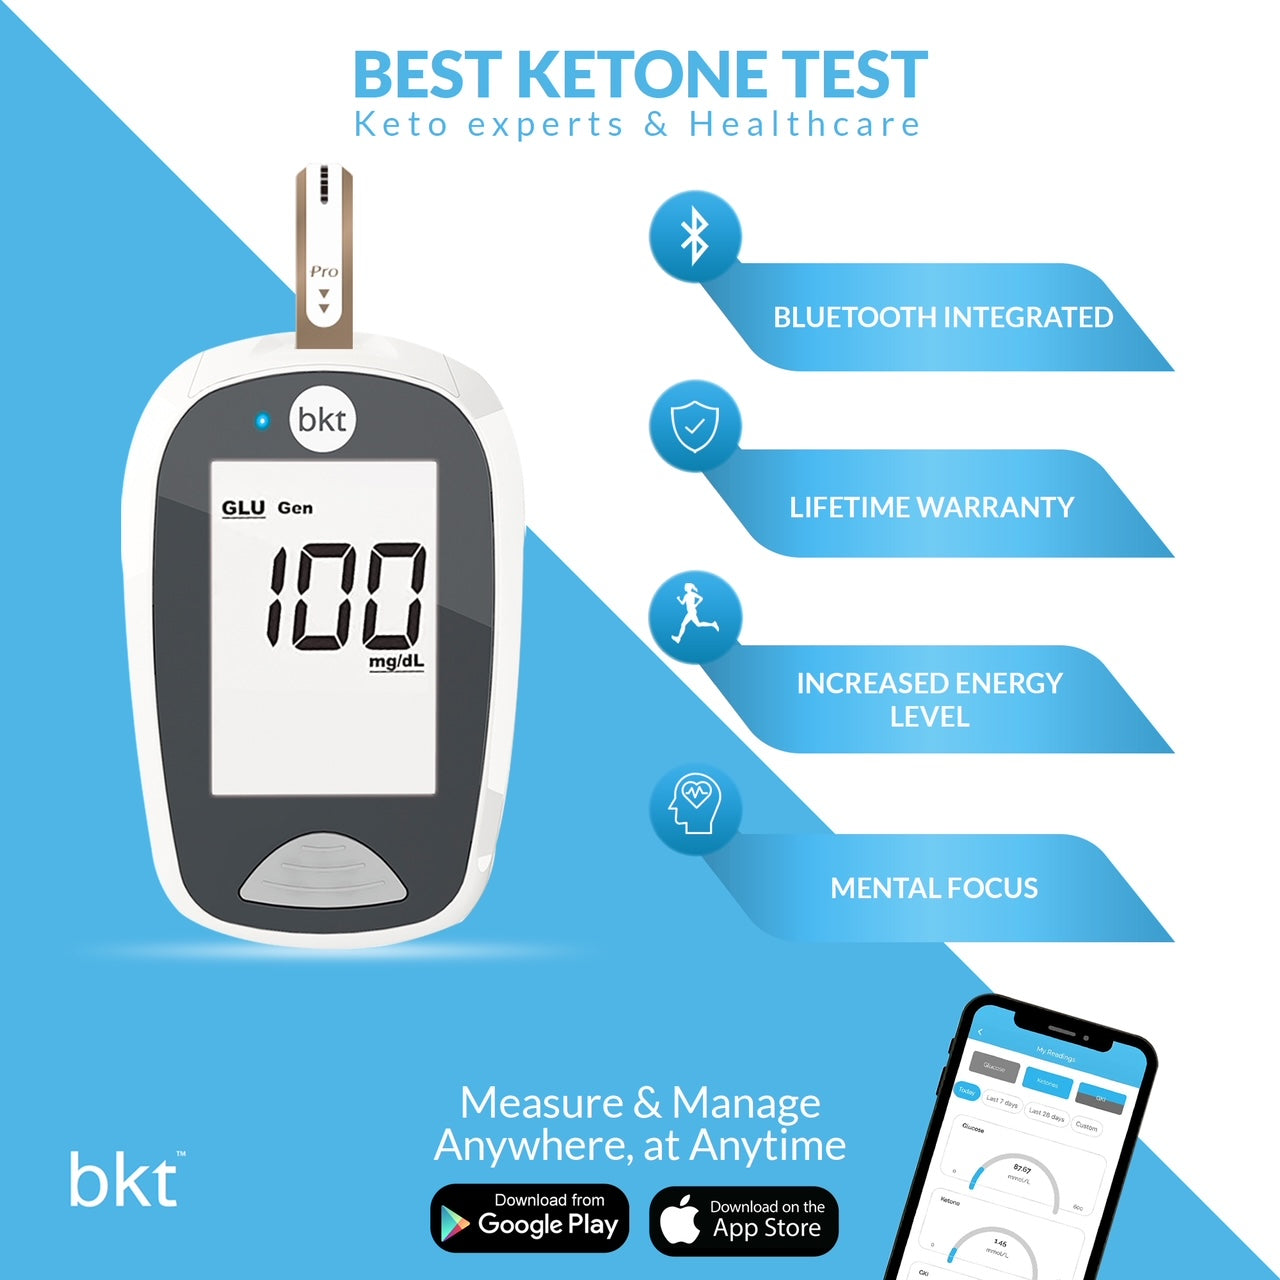 BKT Premium Keto Kit + 28 Day Keto Transformation Book - Best Ketone Test